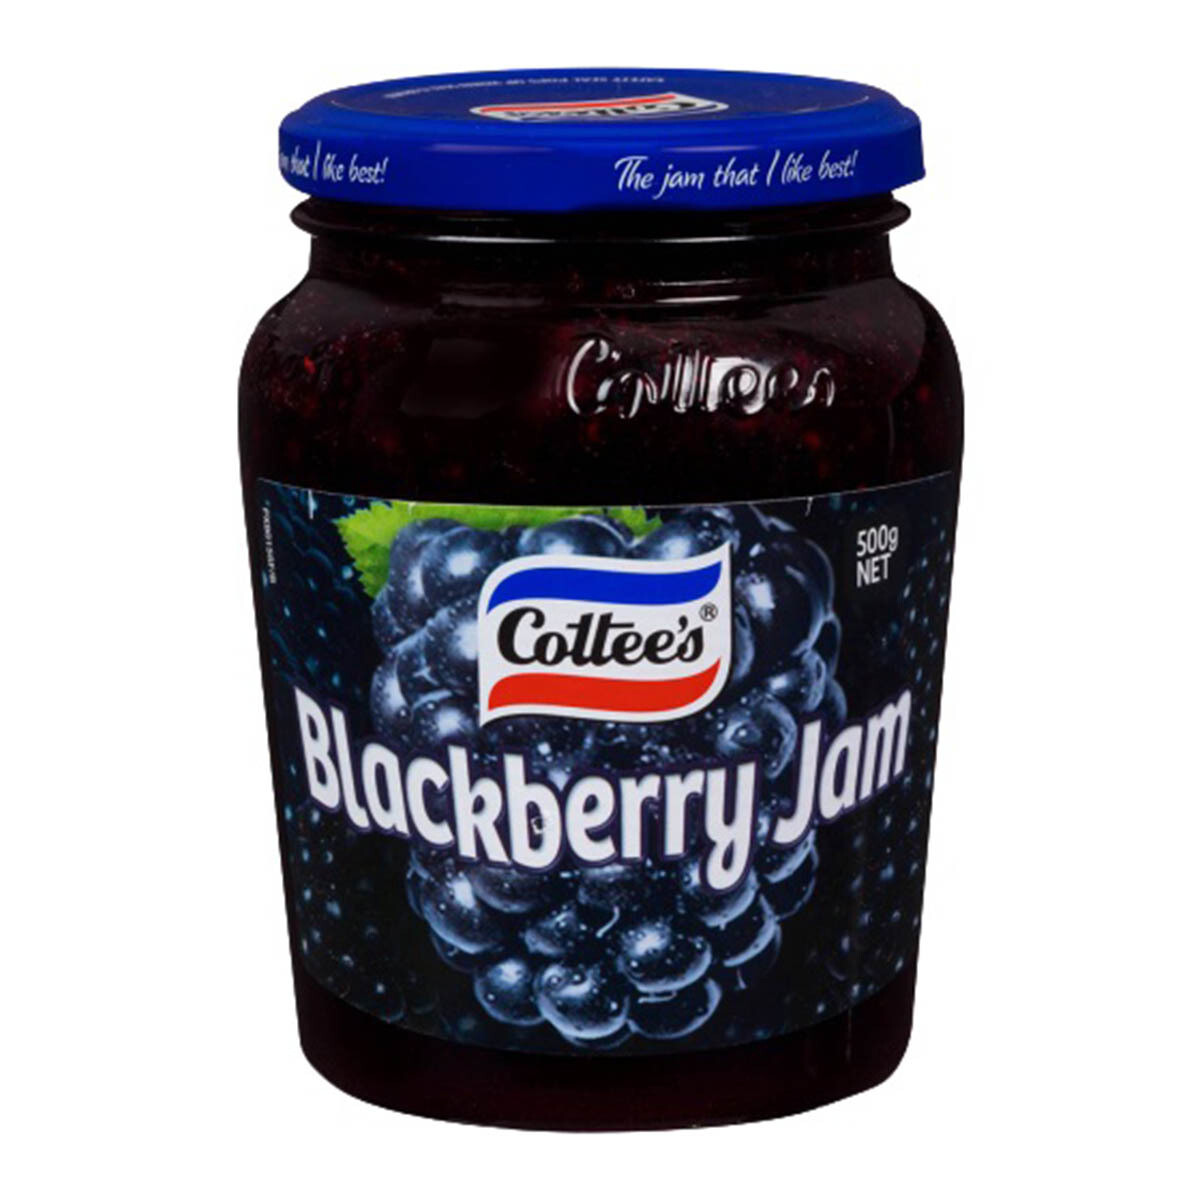 Cottees Blackberry Jam 500gm